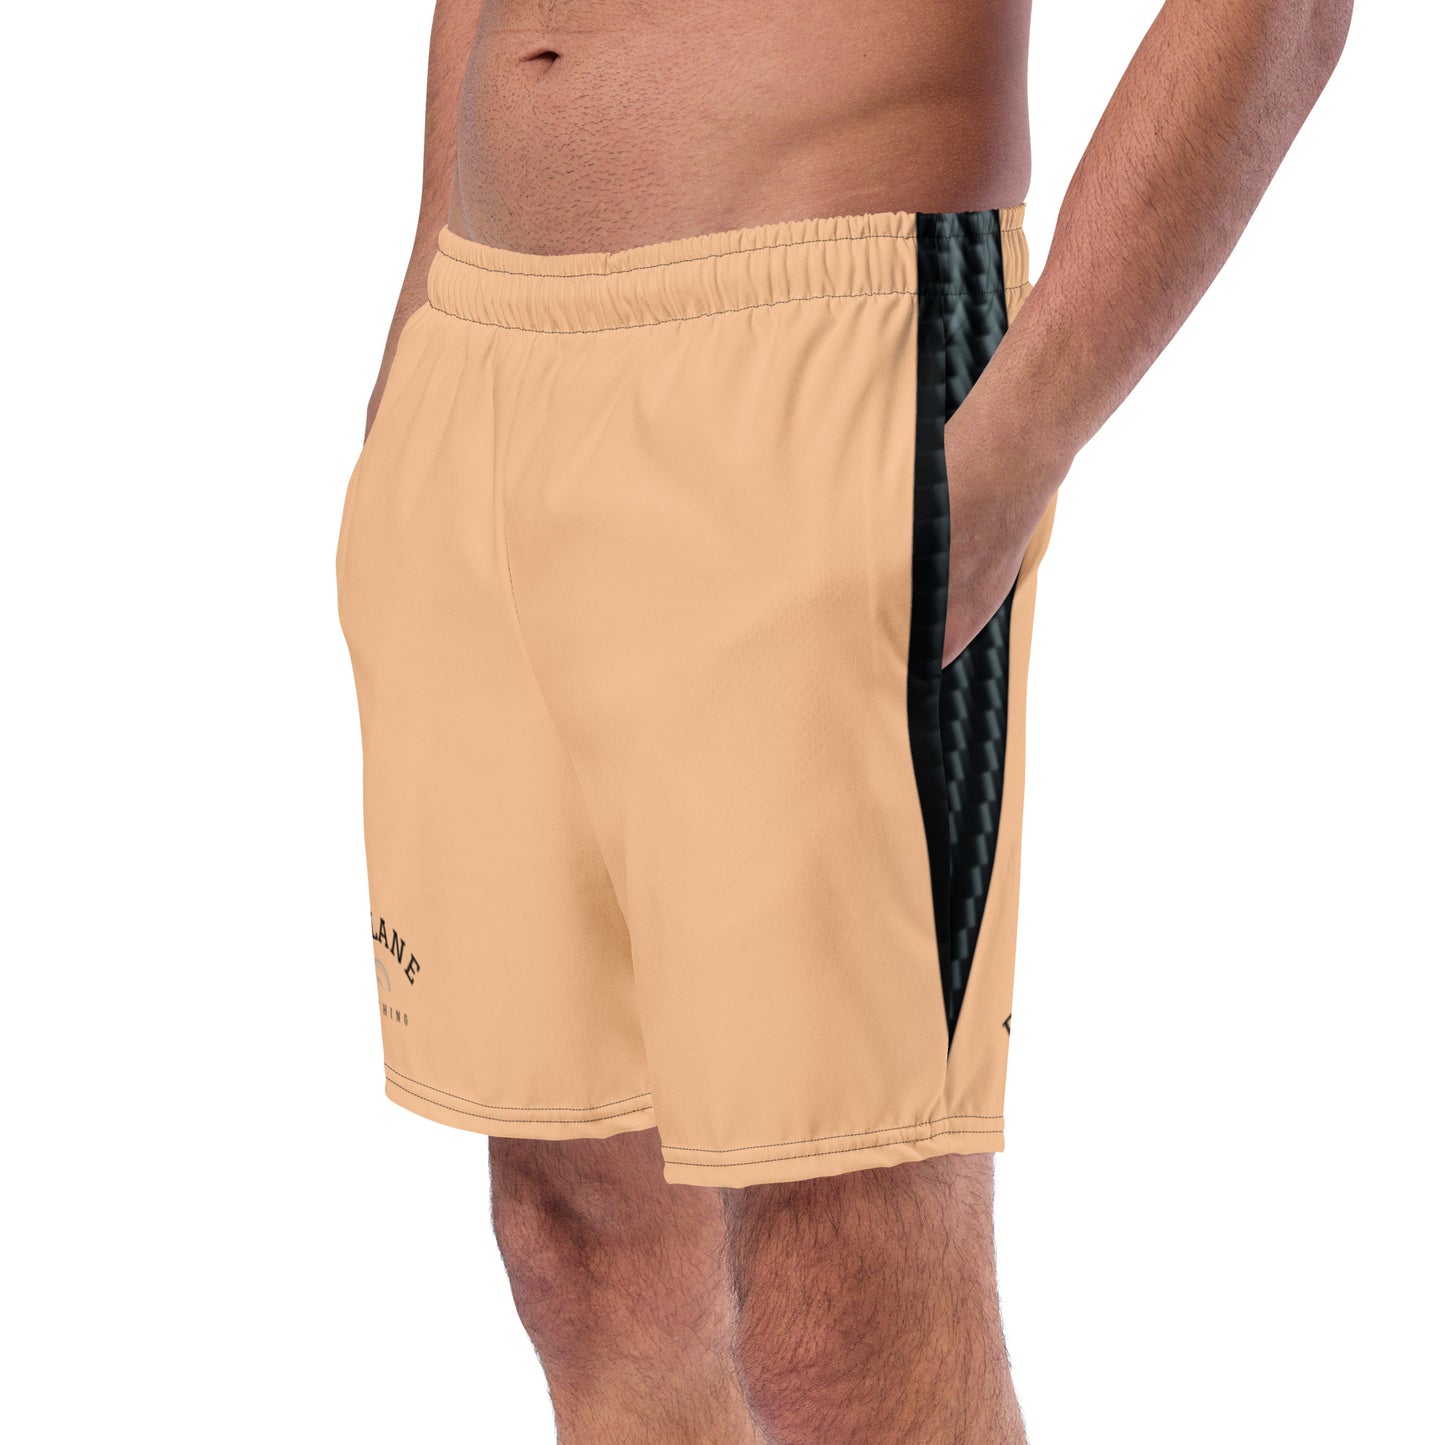 PIT LANE CLOTHING Men's swim trunks